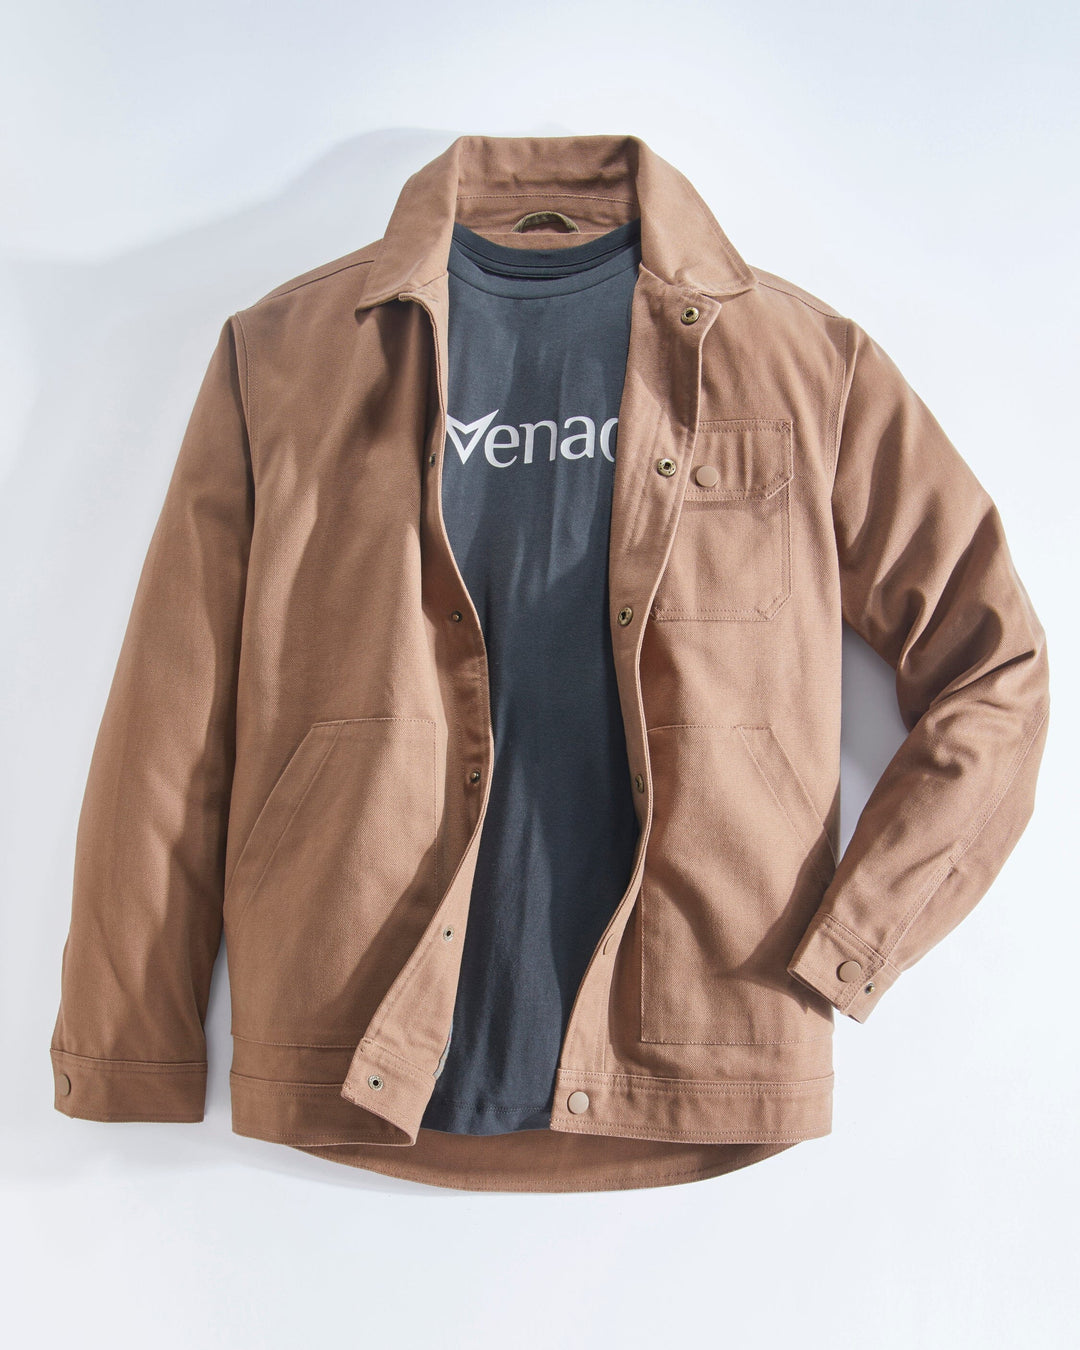 Venado Concealed Carry Shirt Jacket for Men - Heavy Duty Canvas